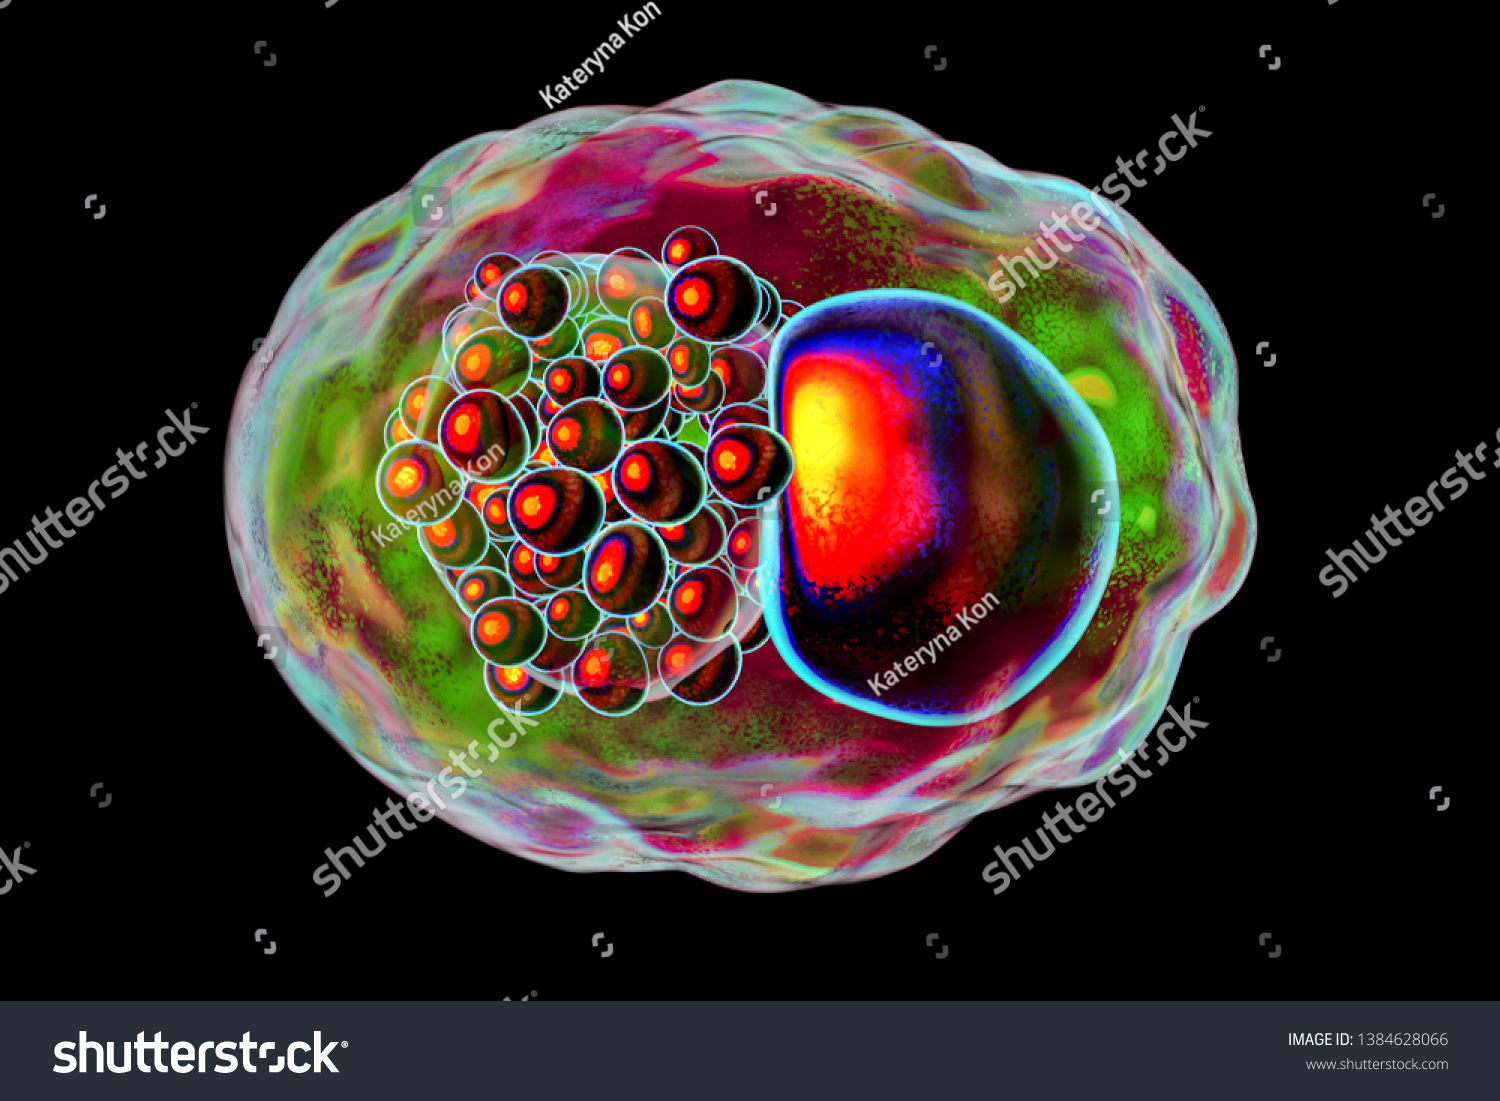 Chlamydia Trachomatis Bacteria 3d Illustration Showing Stock Illustration 1384628066 Shutterstock 0976